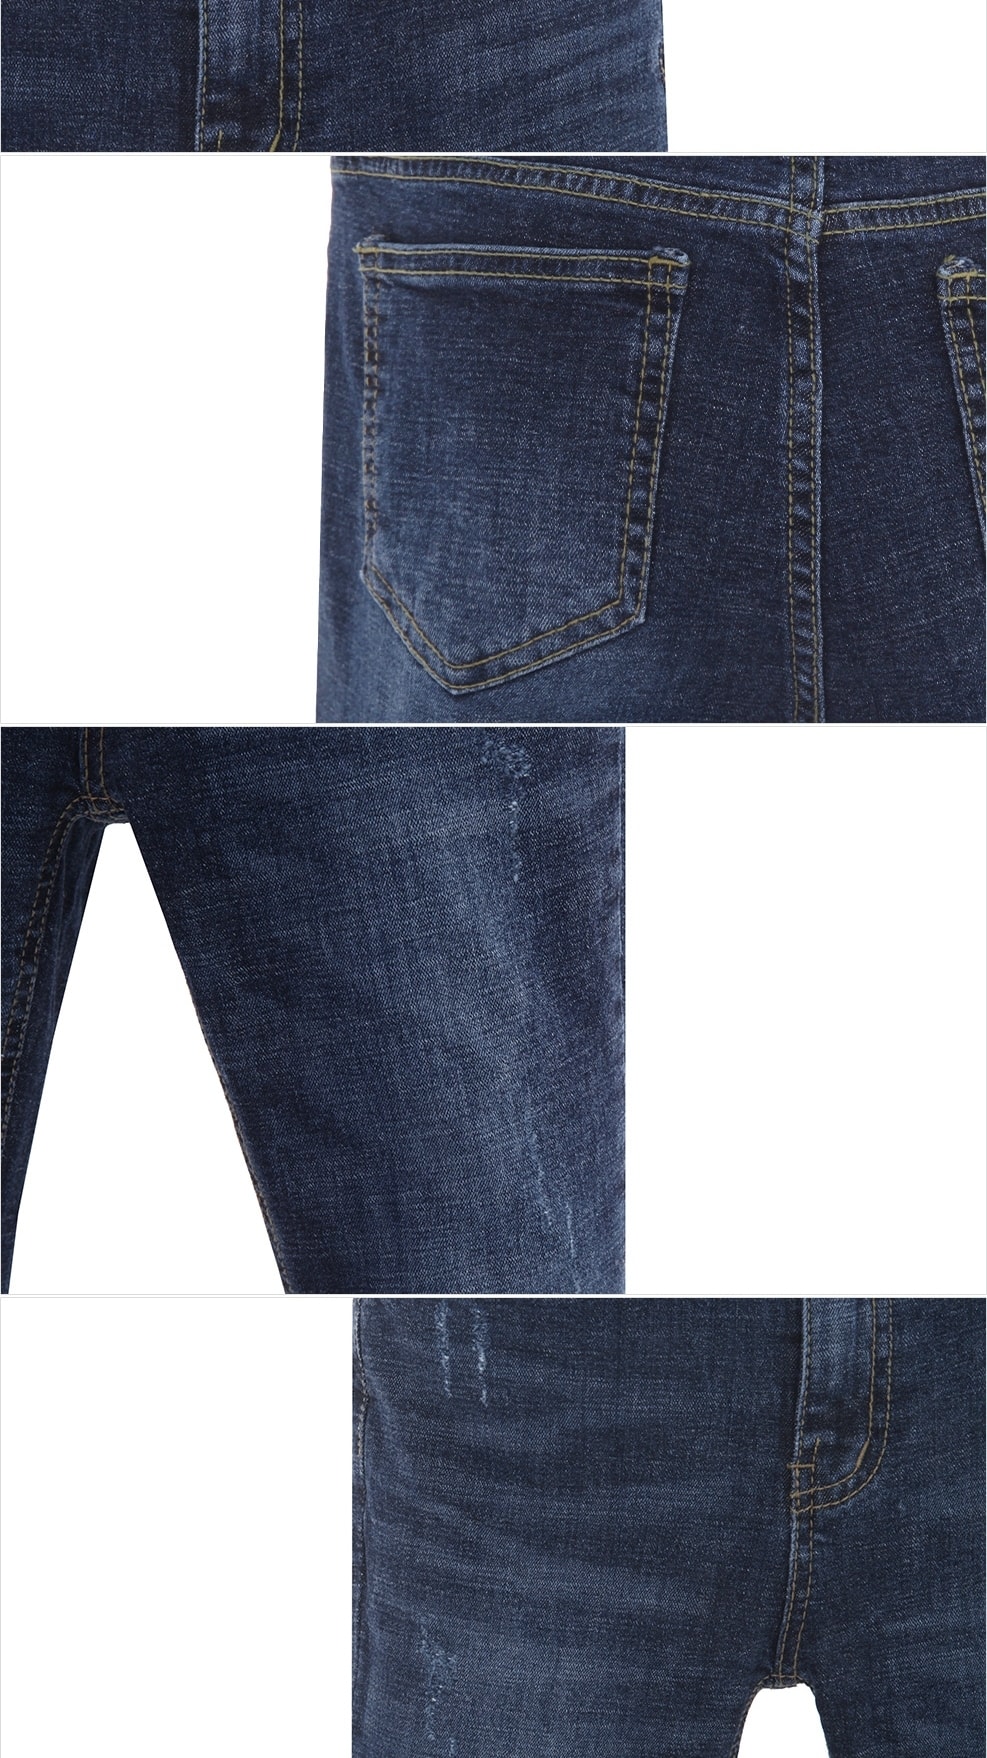 jeans DarkBlue(model) L